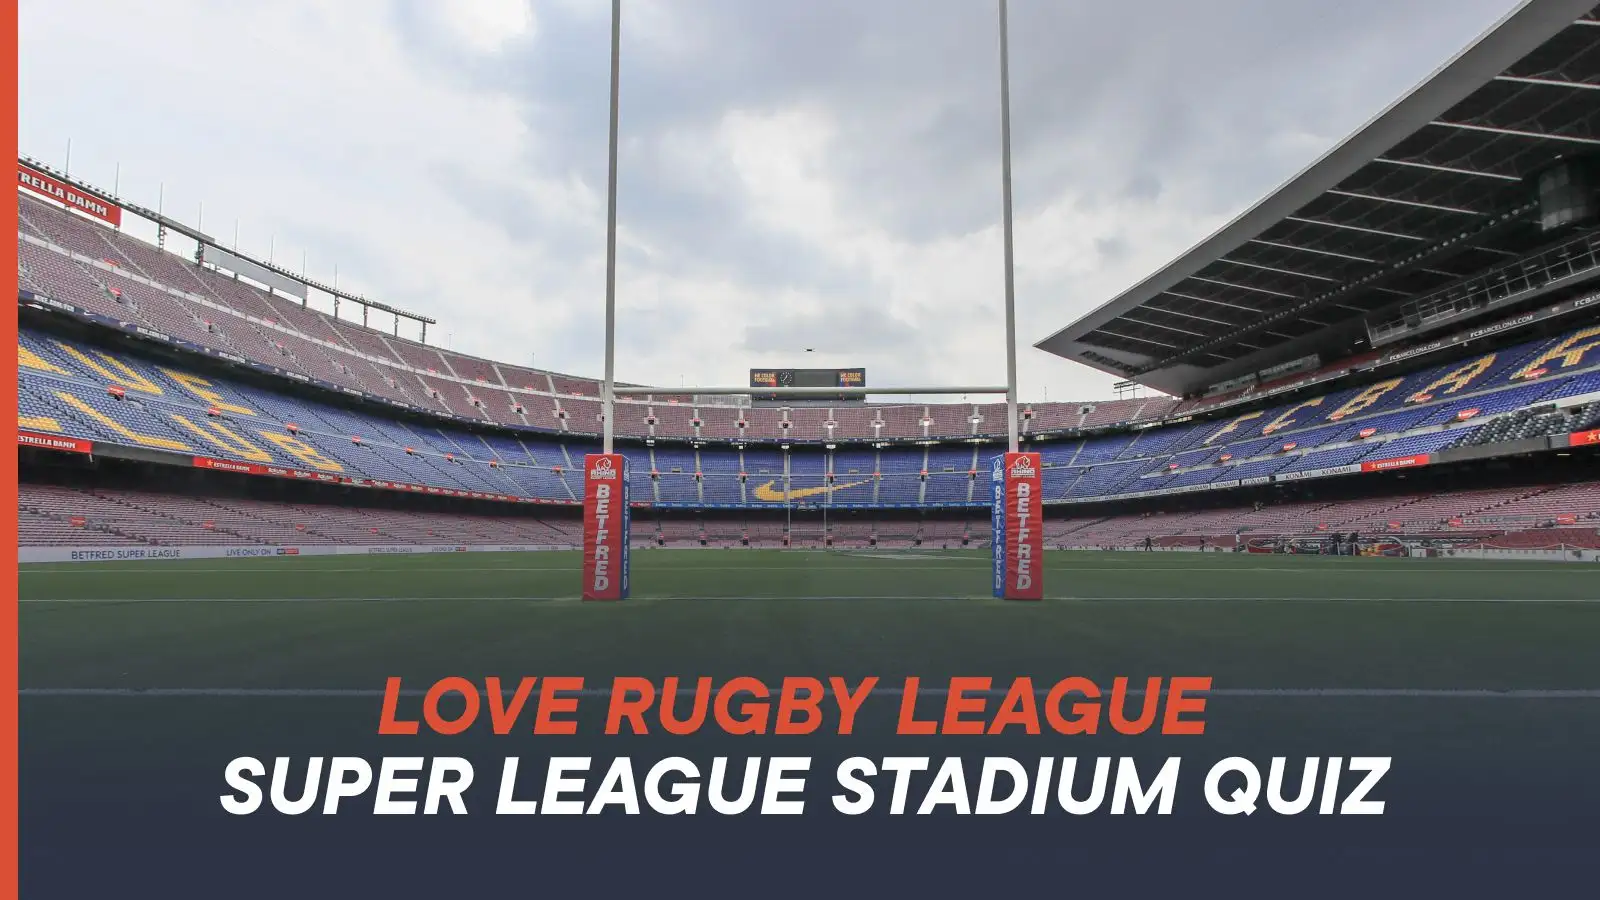 Love Rugby League Super League stadium quiz